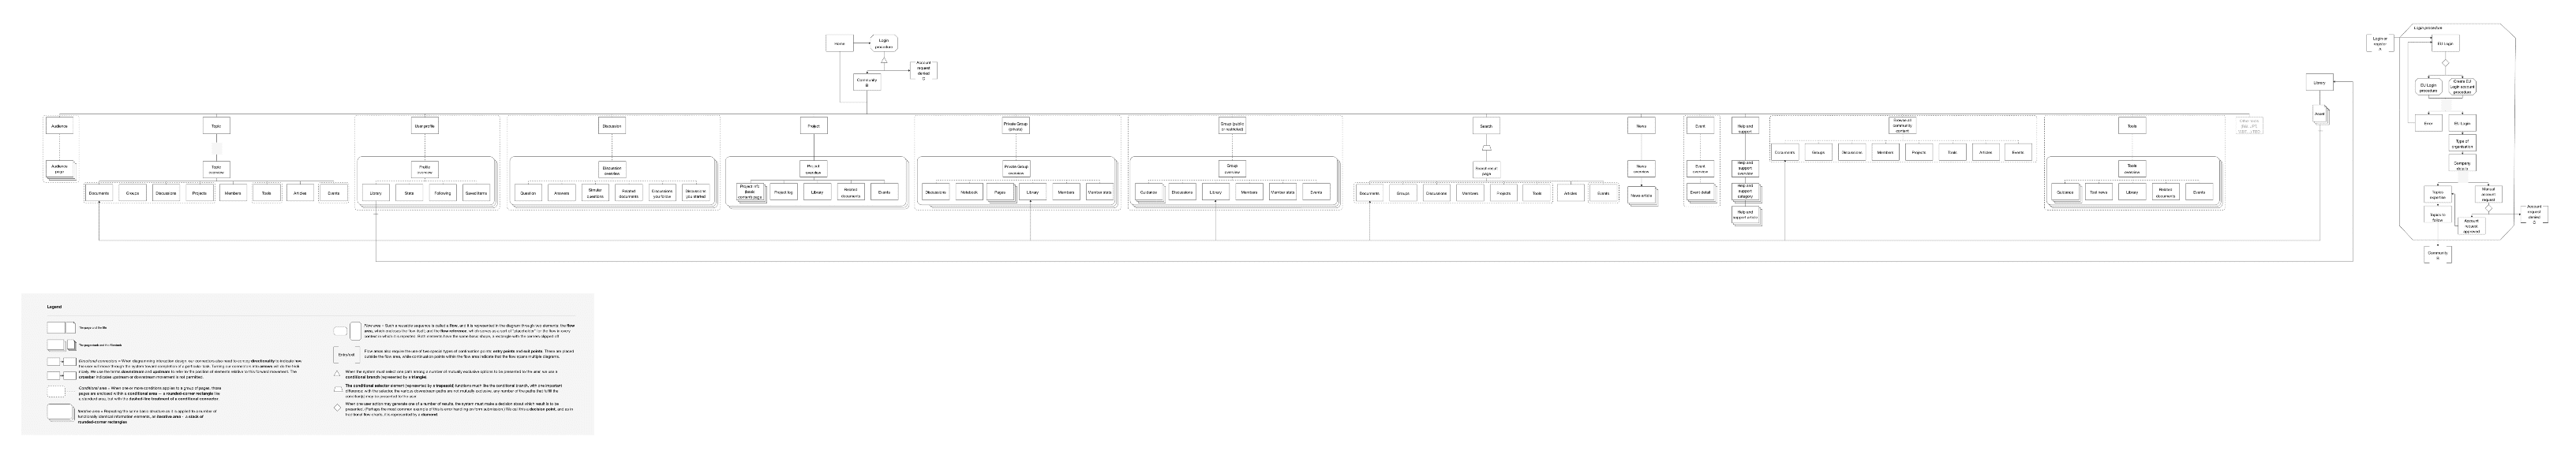 Screenshot of the very platform-like flat information architecture based on JJG's IA vocabulary.